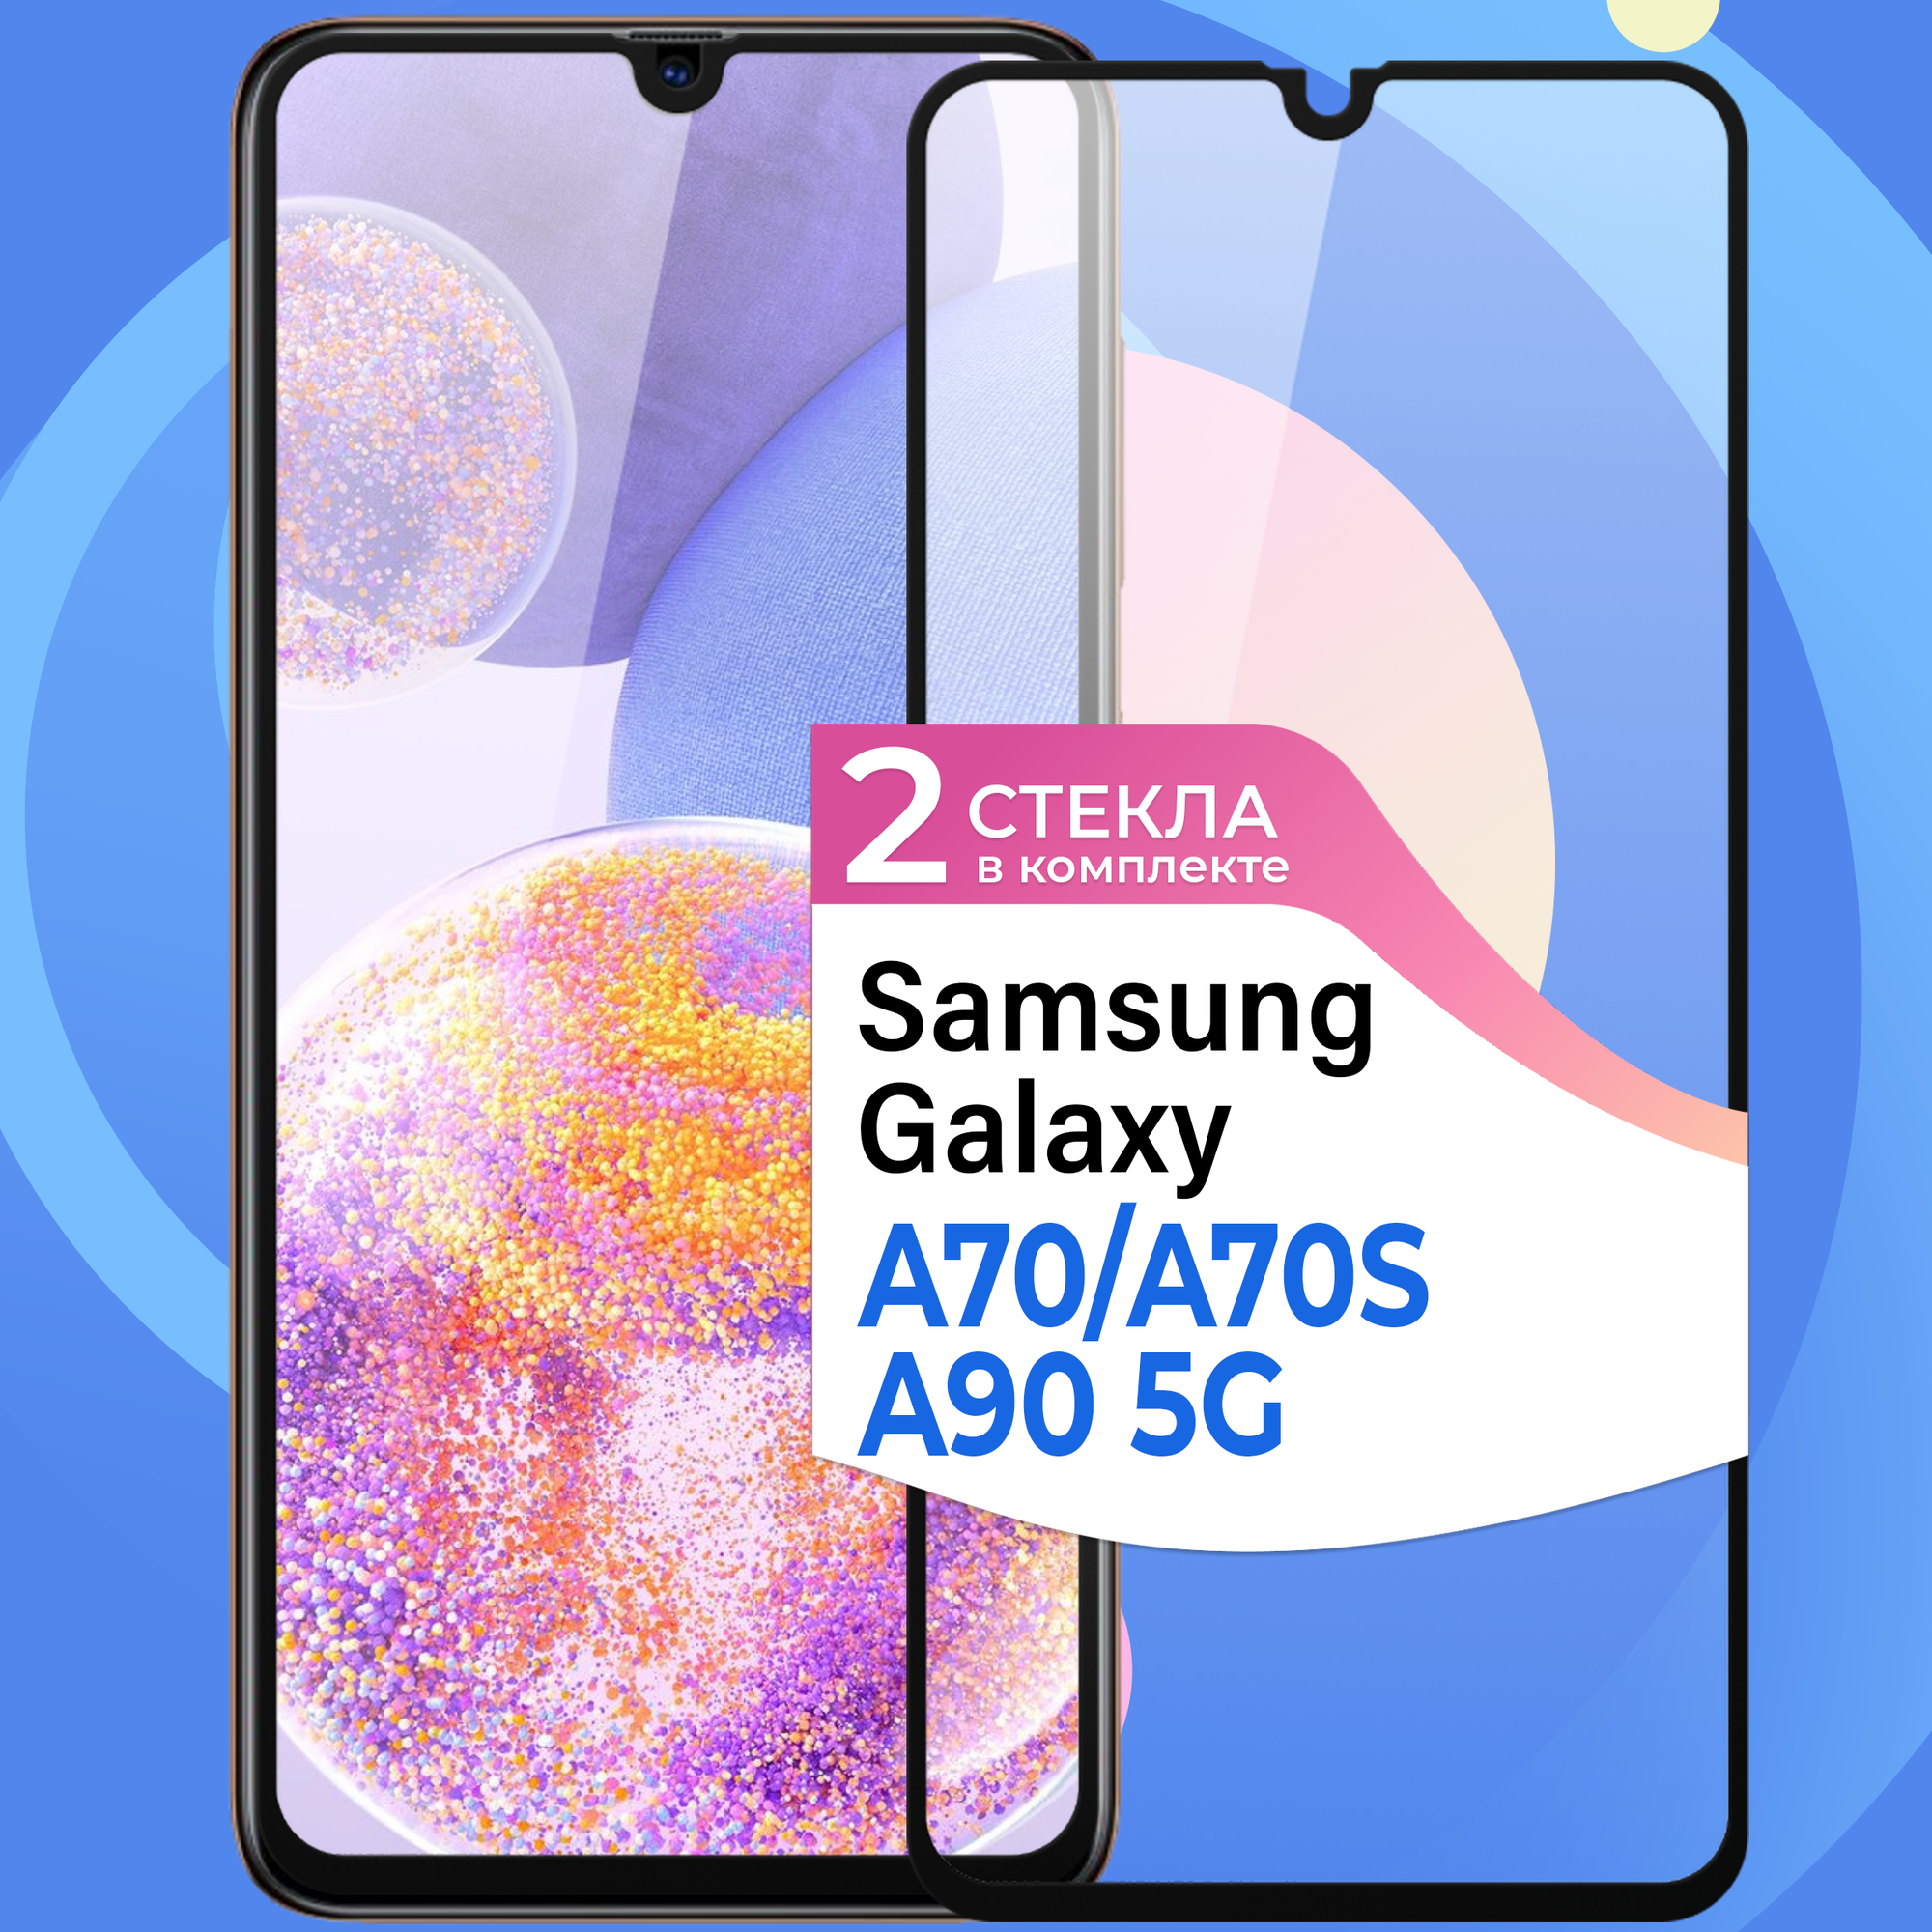 Комплект 2 шт. Защитное стекло на телефон Samsung Galaxy A70, Galaxy A70S и Galaxy A90 5G / Стекло на телефон Самсунг Галакси А70, А70С и А90 5 Джи